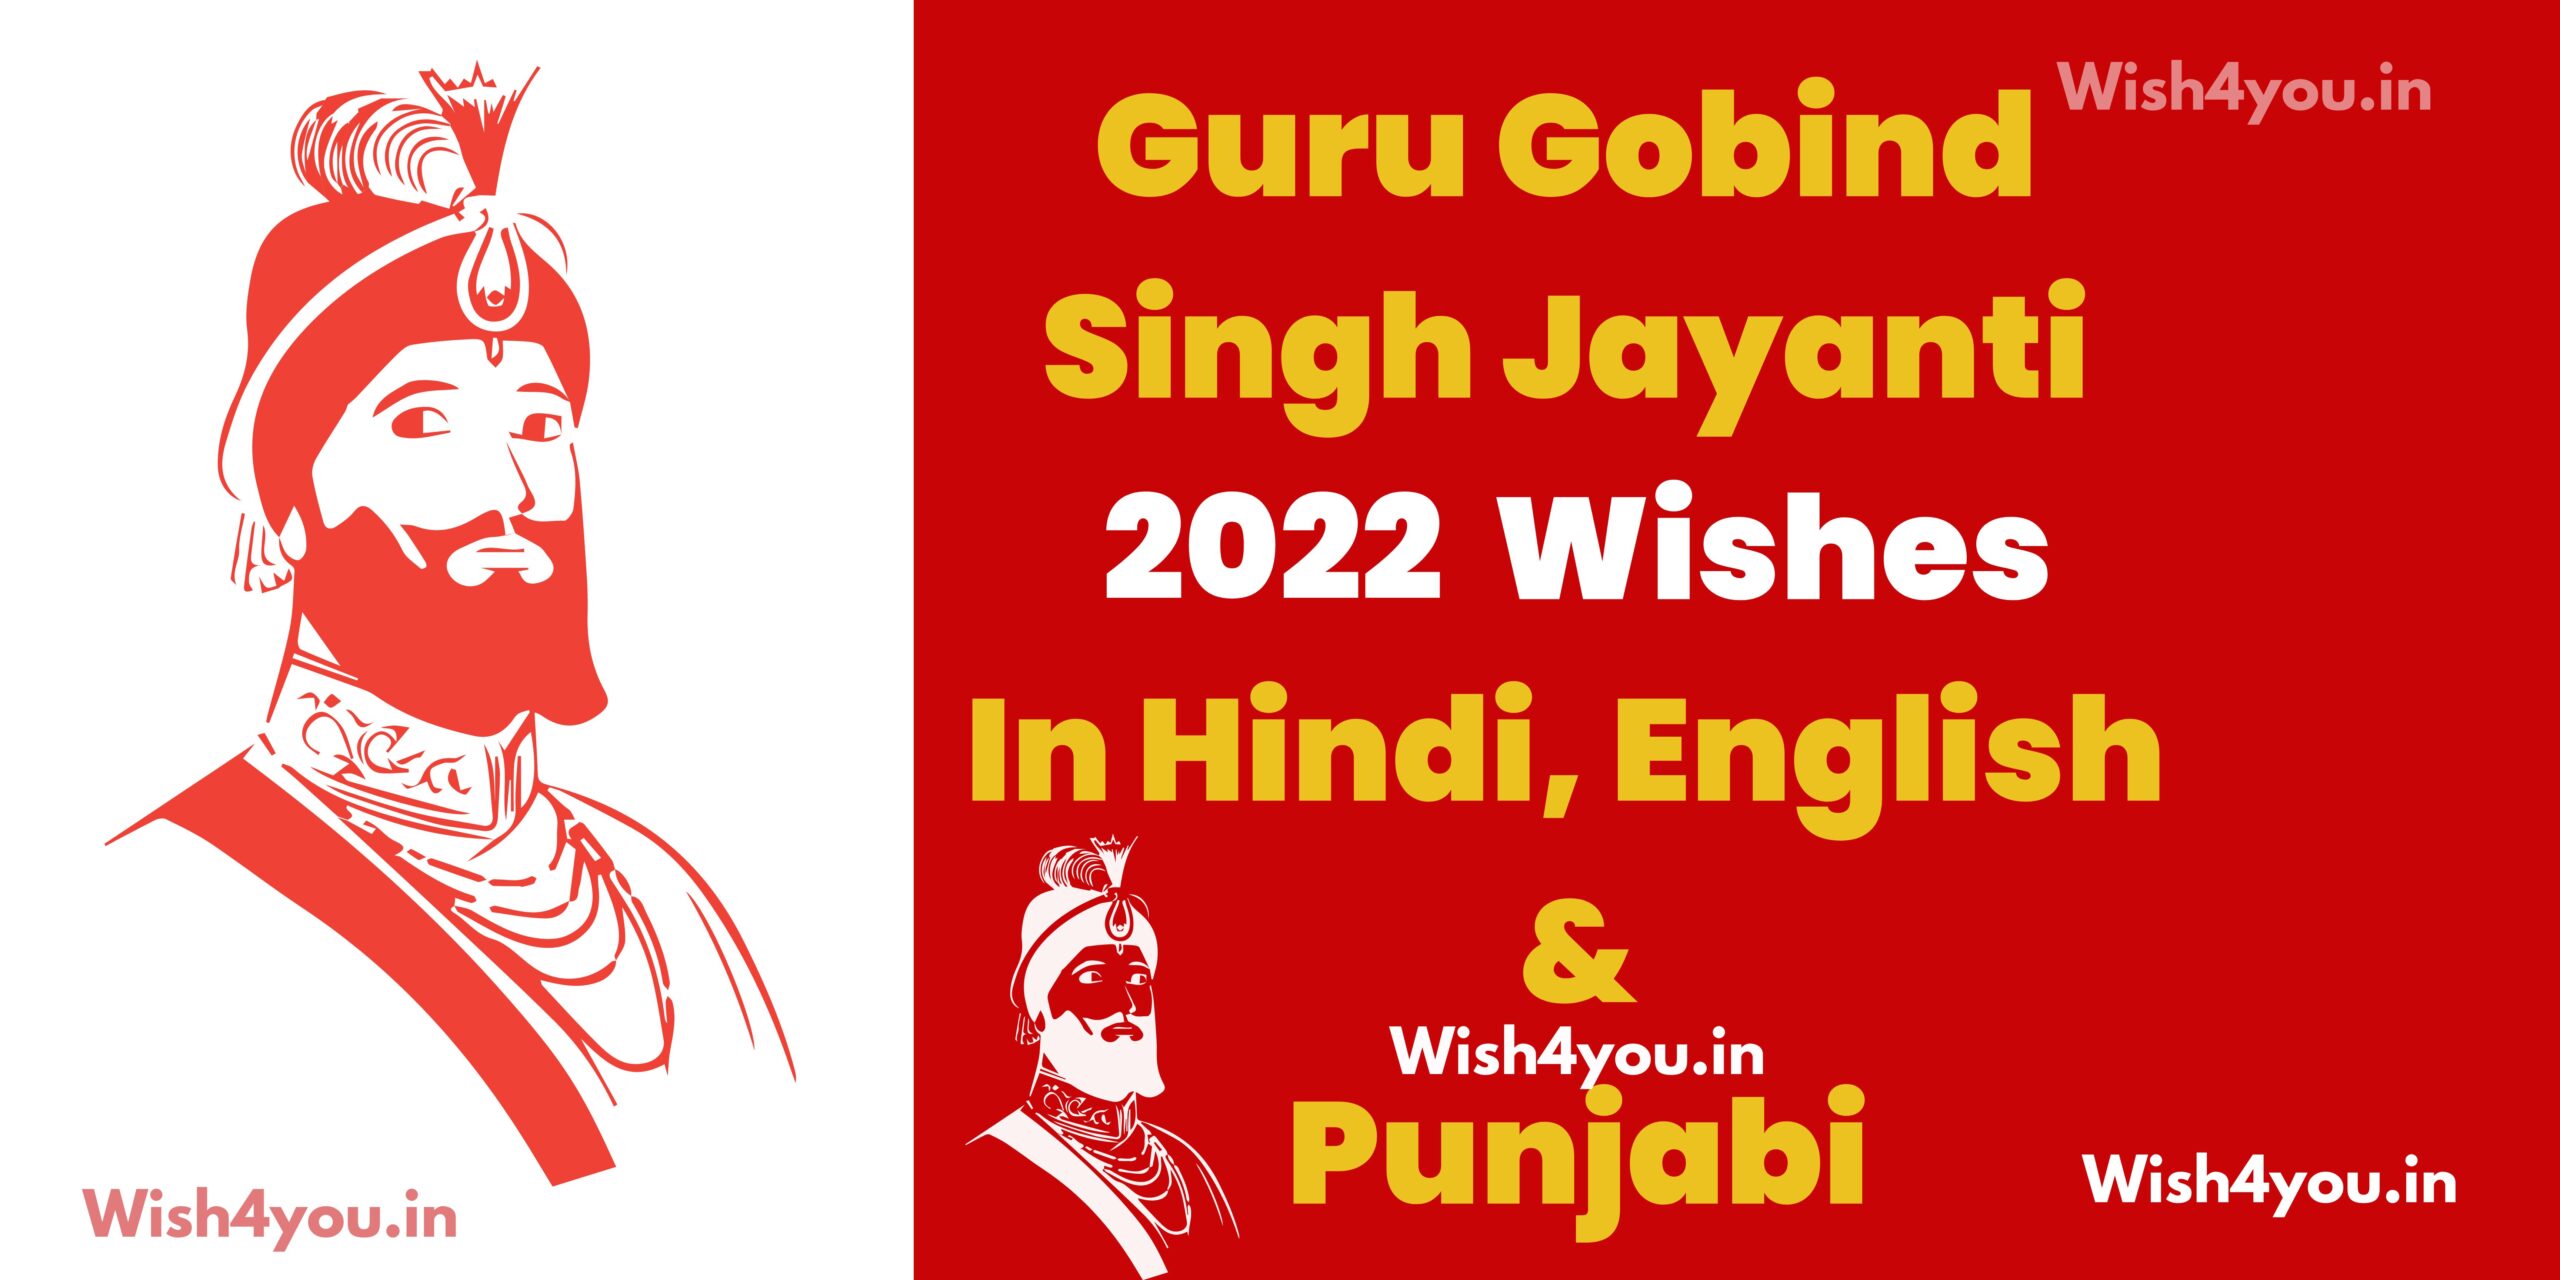 Guru Gobind Singh Jayanti 2022 Wishes